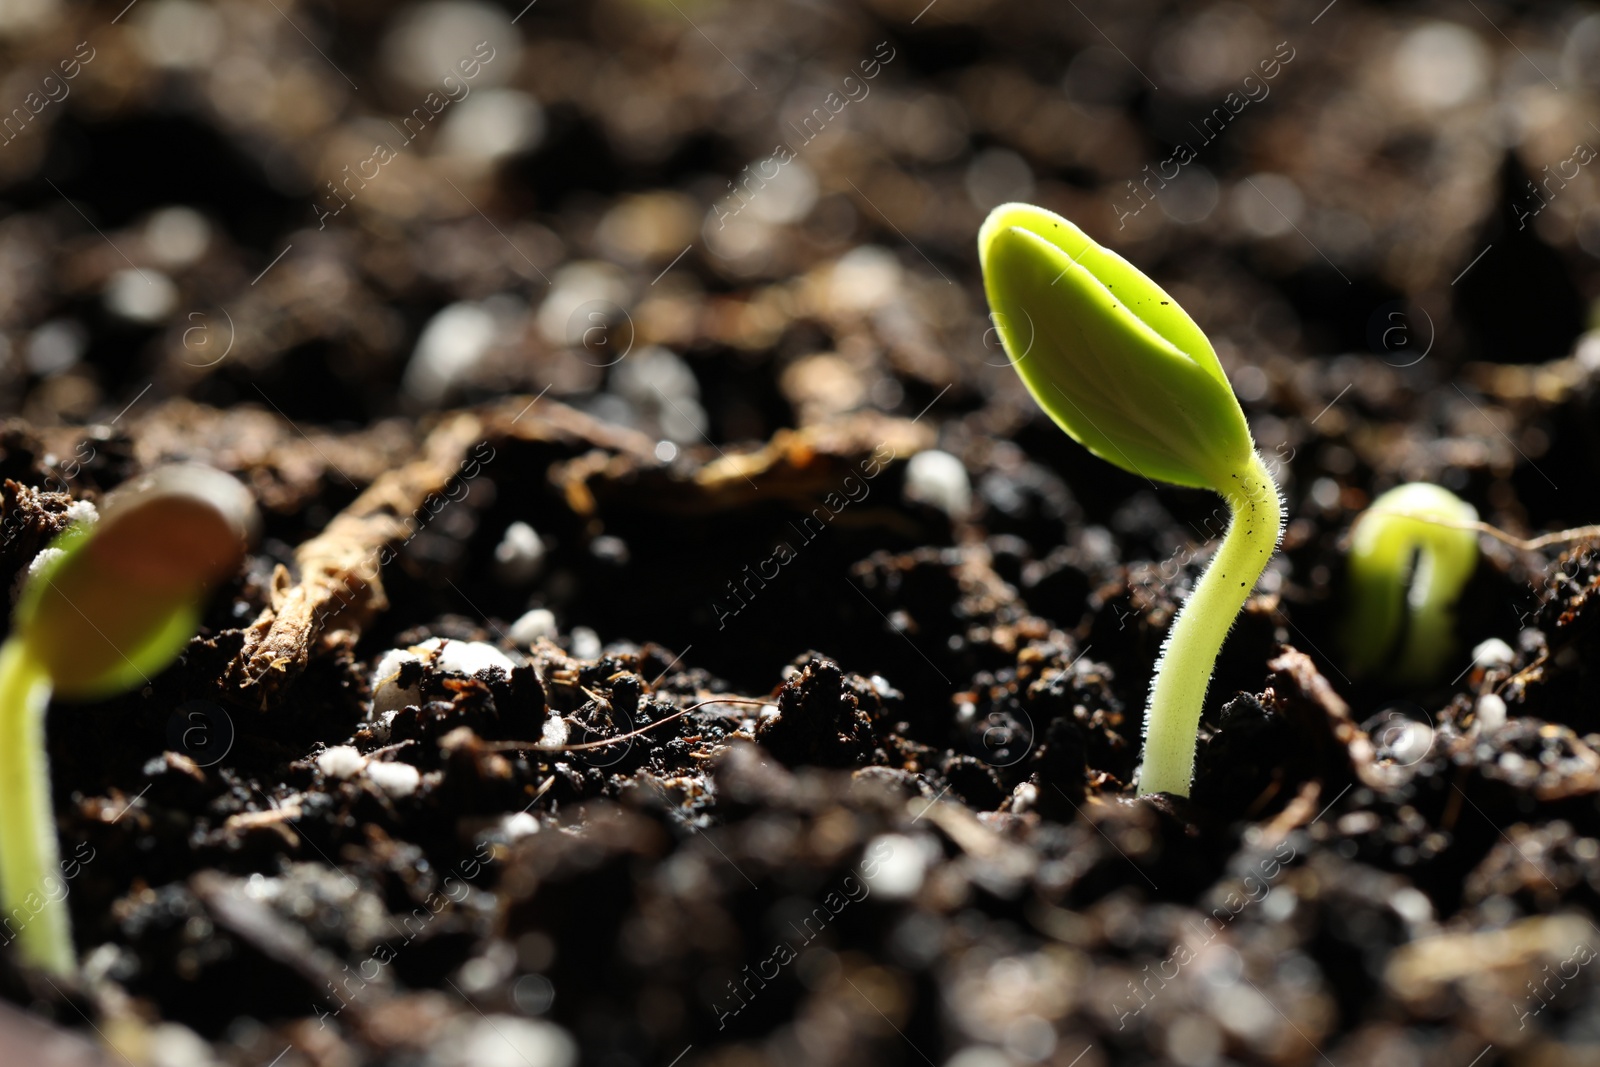 Photo of Little green seedling growing in soil, closeup